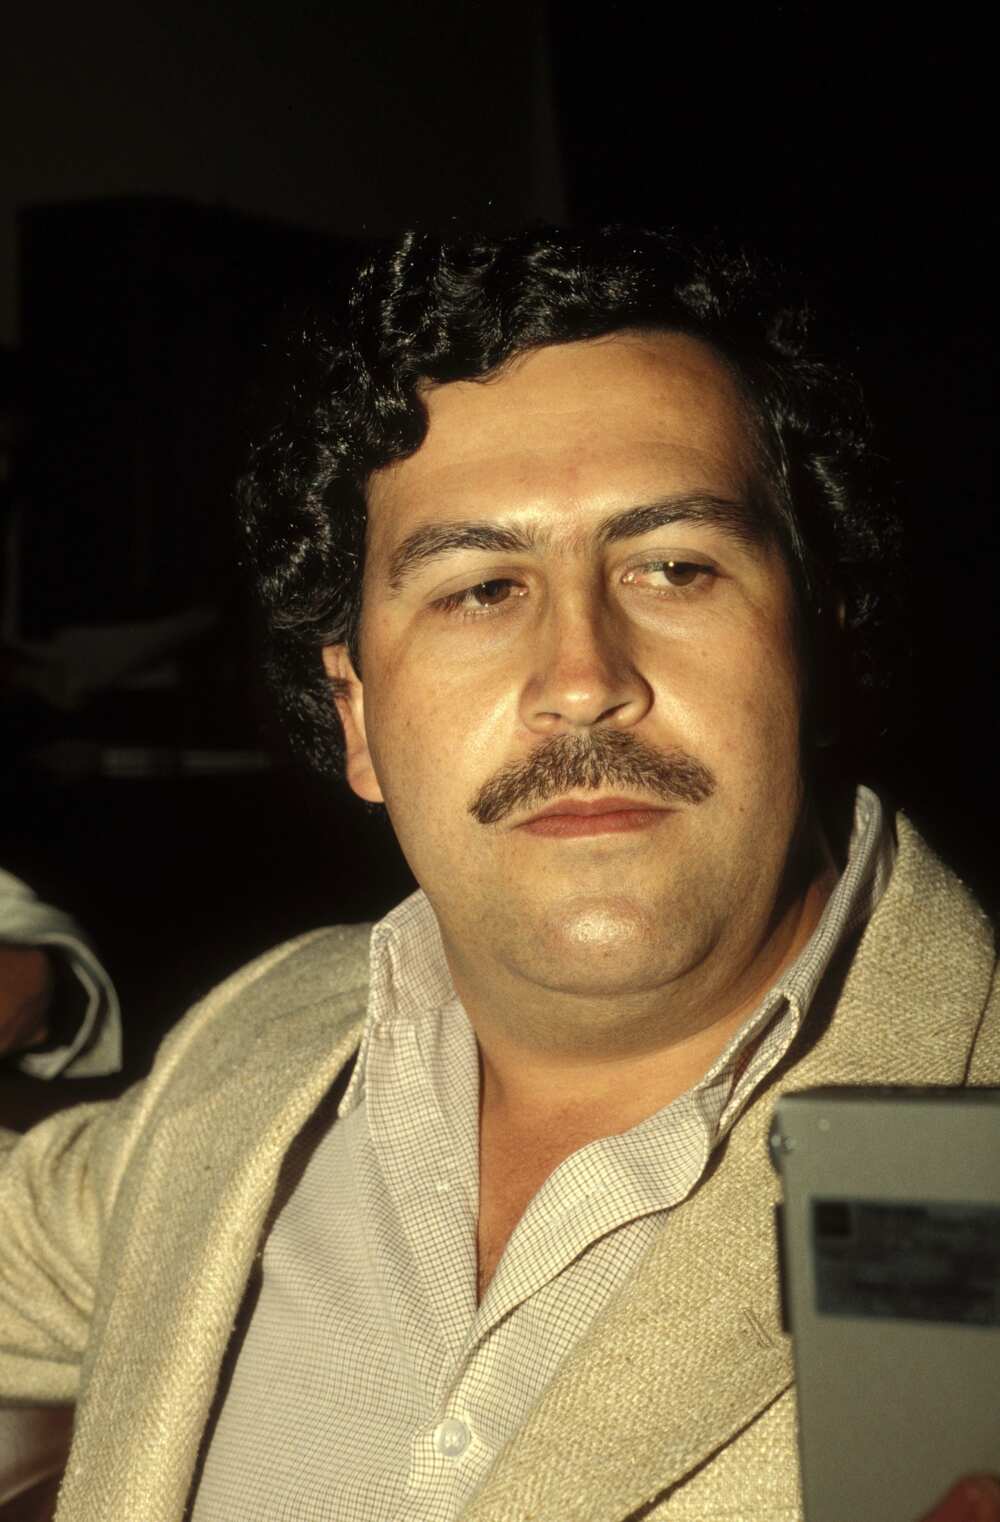 Pablo Escobar's money